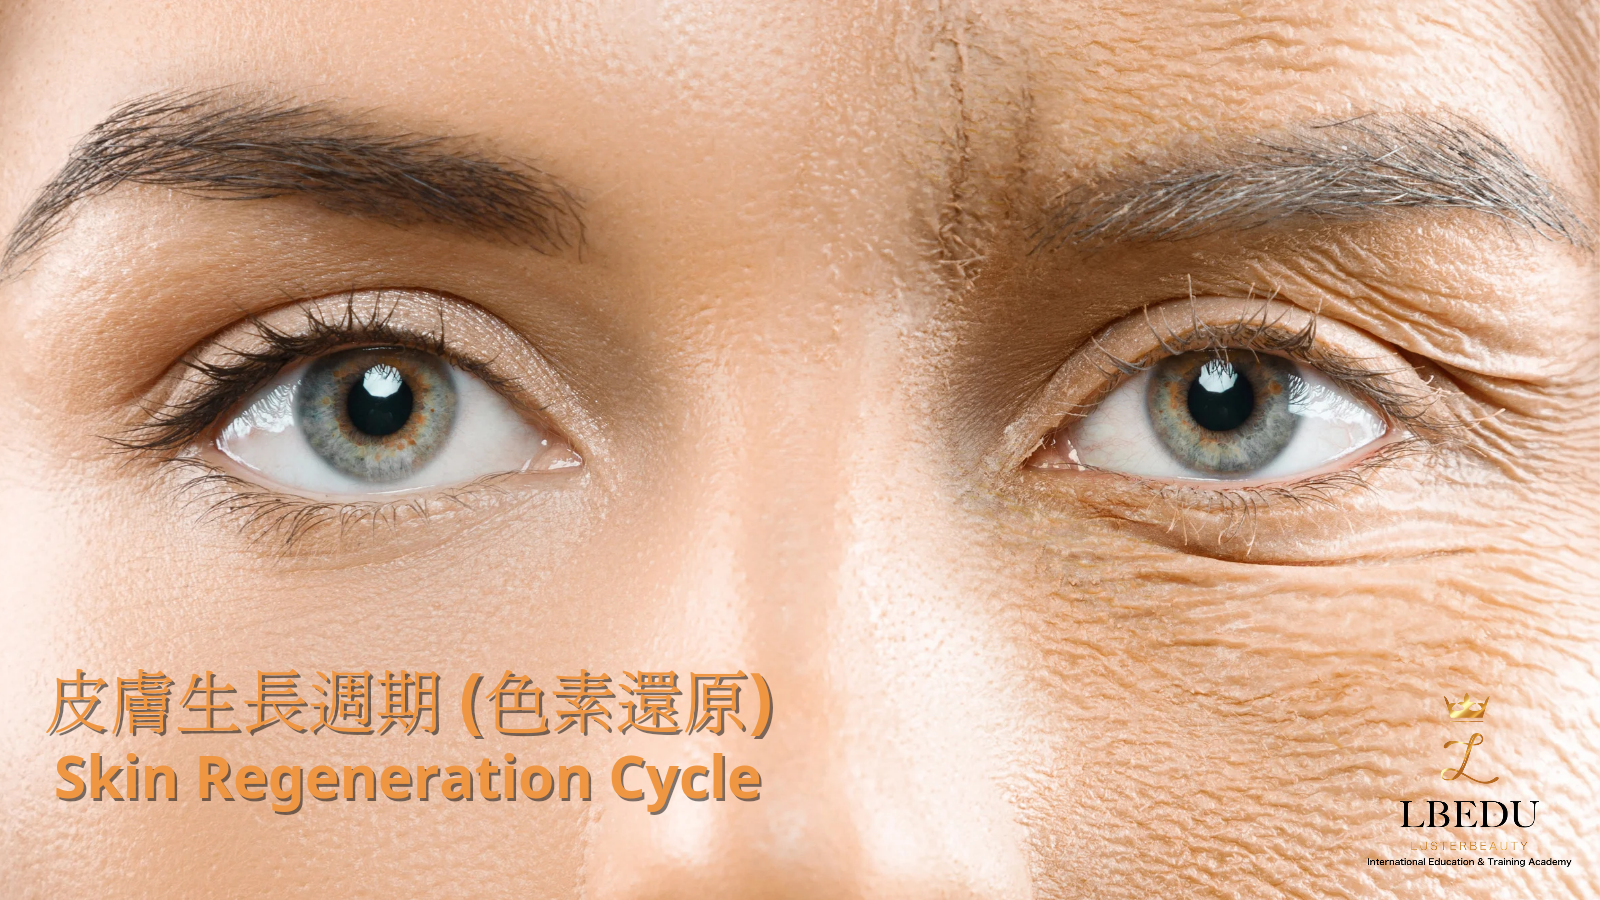 Skin Regeneration Cycle